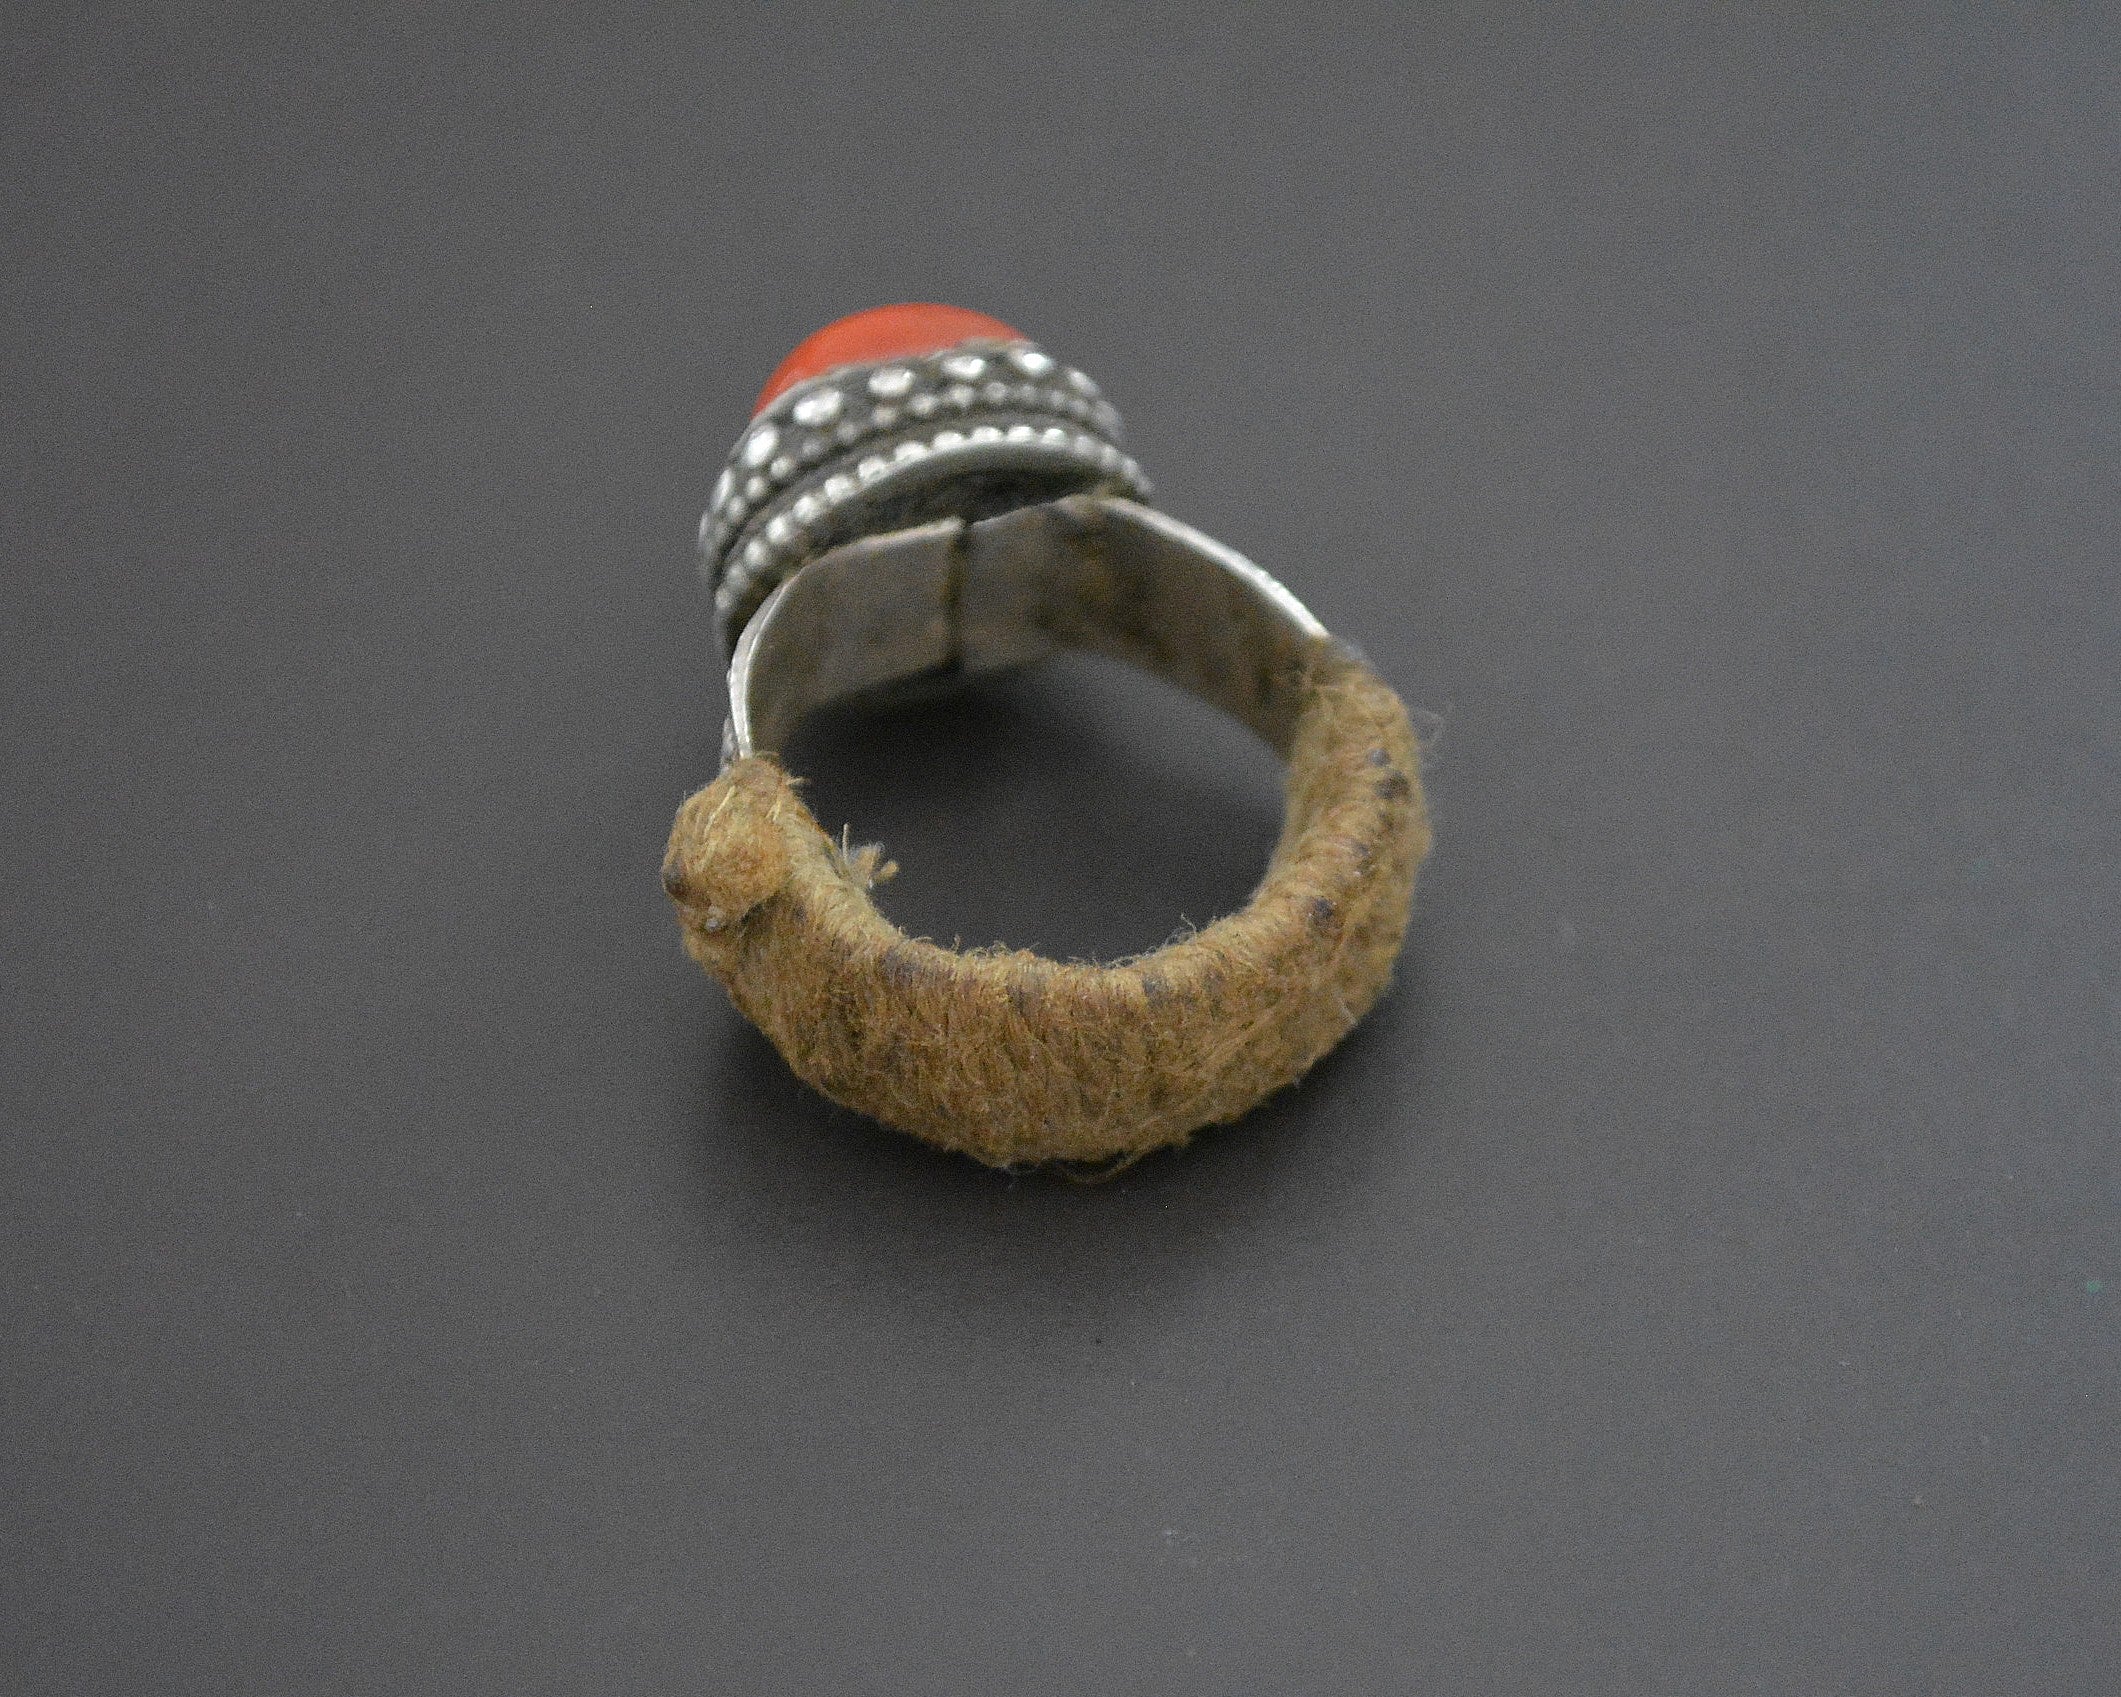 Old Tibetan Coral Ring - Size 9